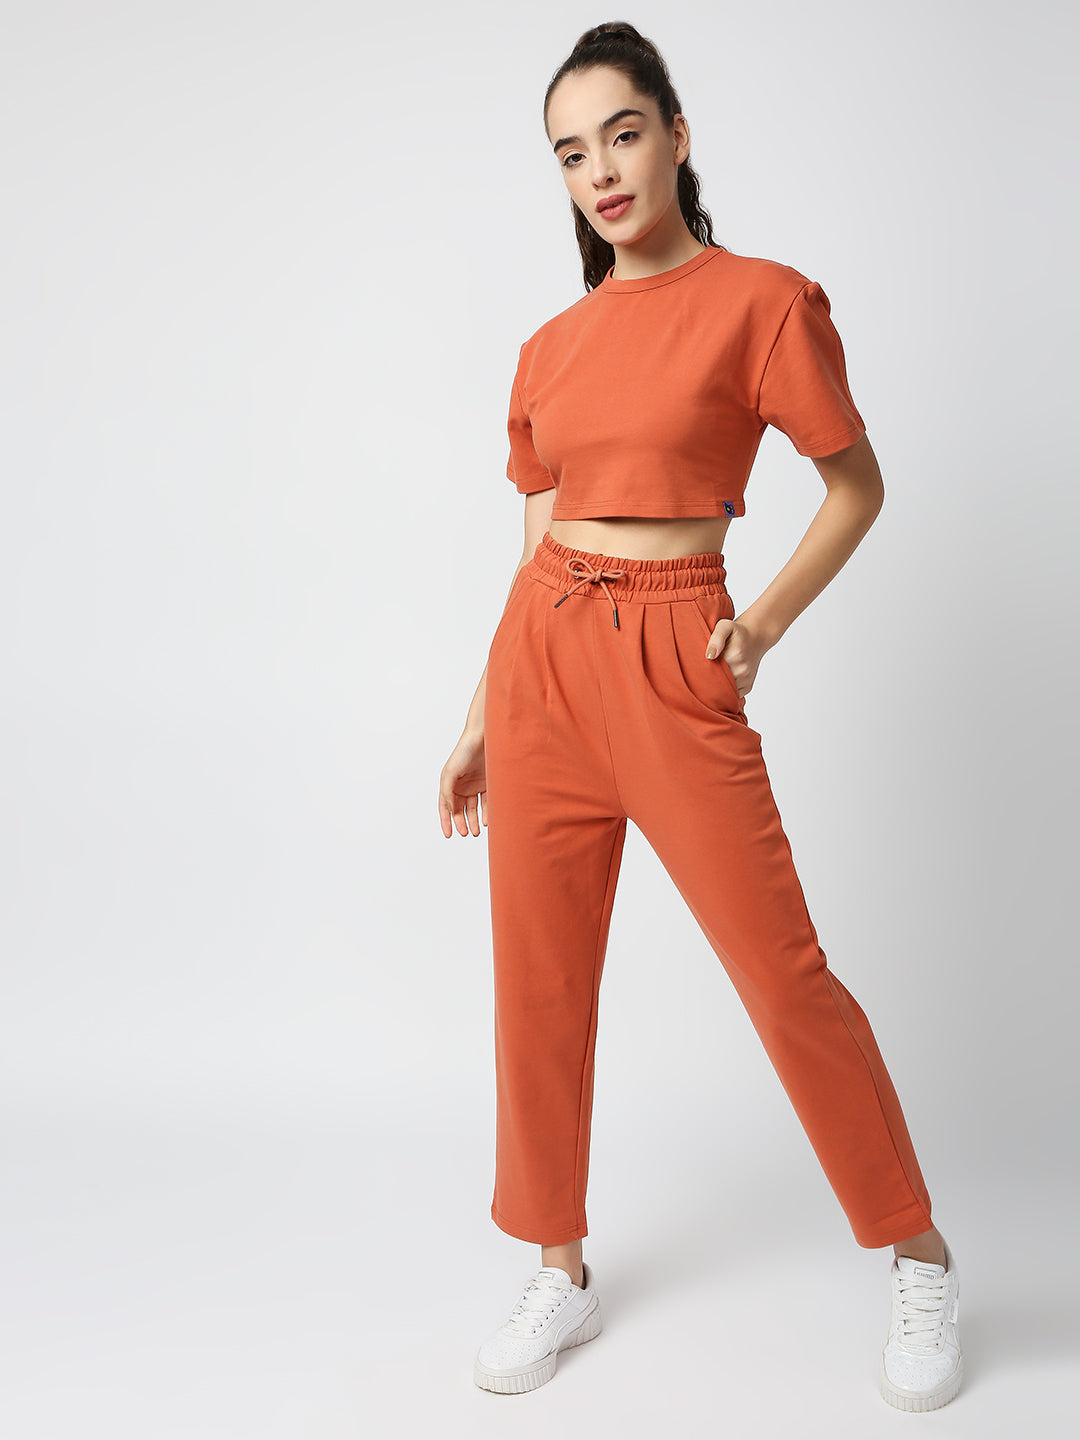 Buy Blamblack Women's Solid Rust Color Half Sleeves Co-Ordinate Set